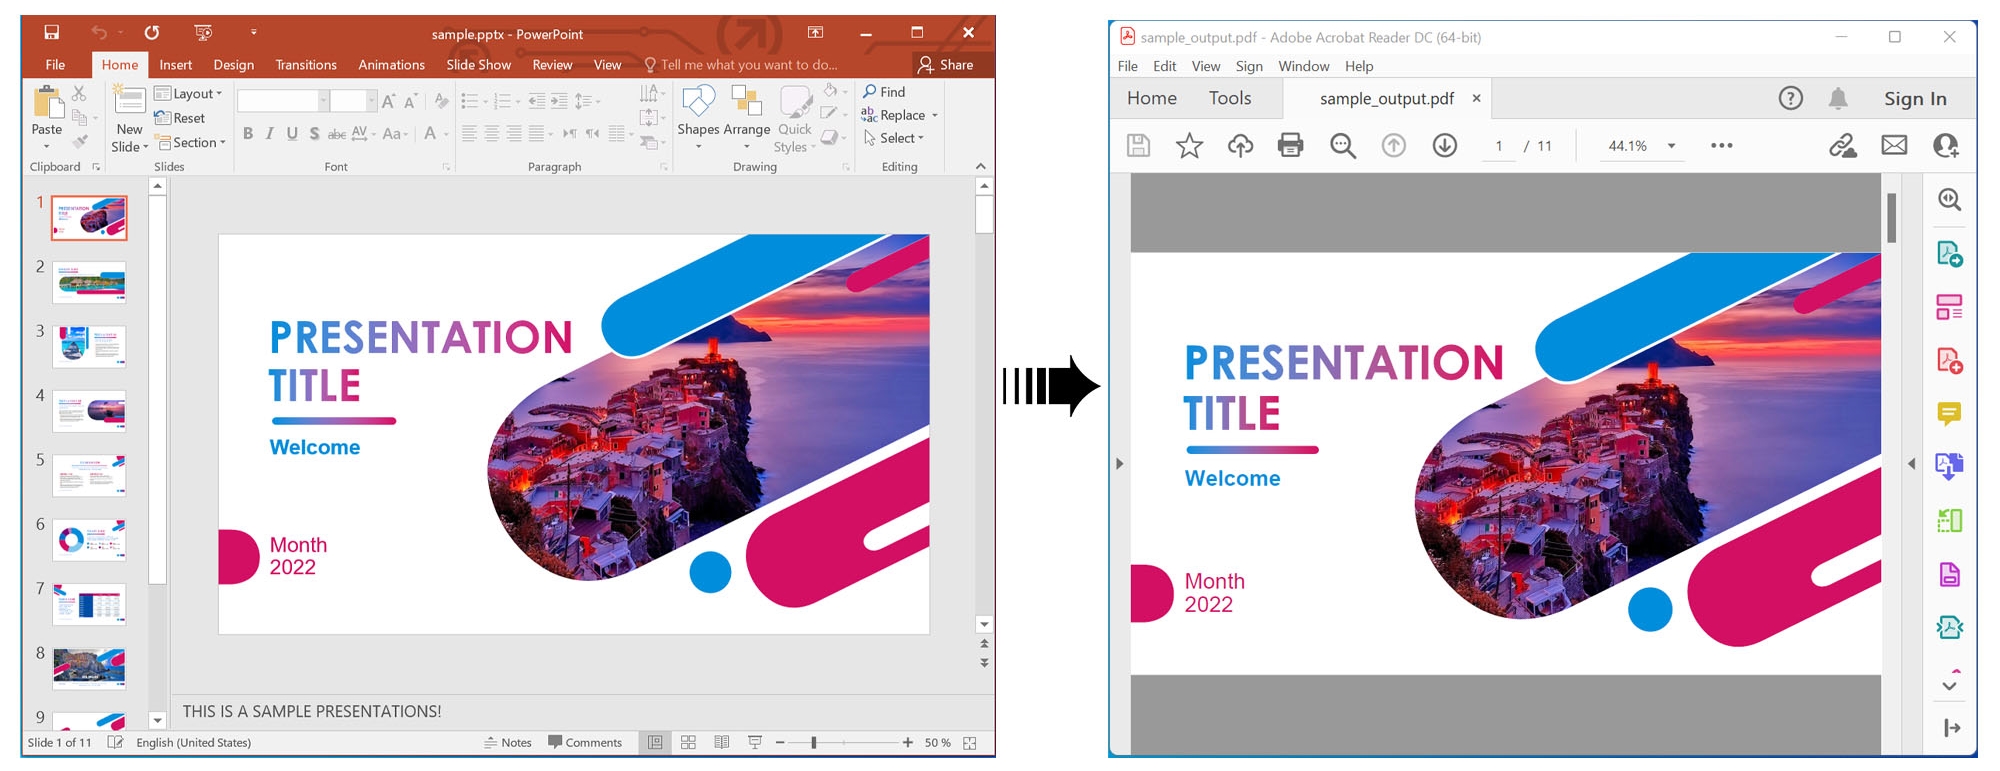 Render PowerPoint Presentation in PDF using C#.